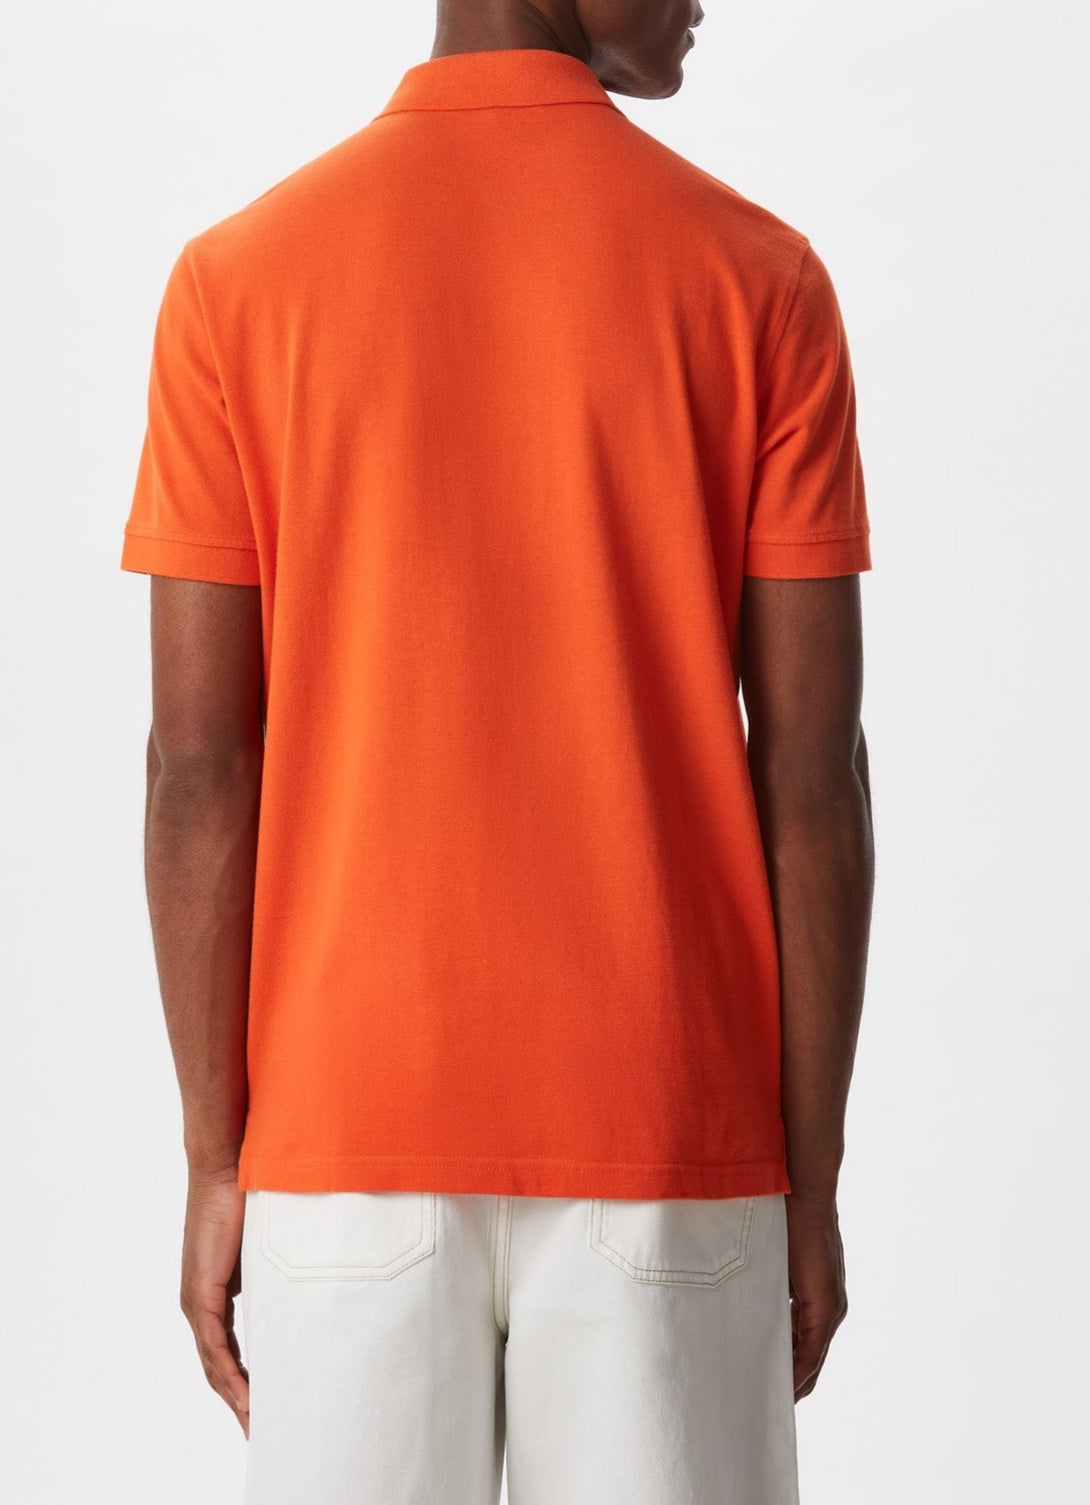 Men Polo | Orange Cotton Pique Washed Polo Shirt by Spanish designer Adolfo Dominguez